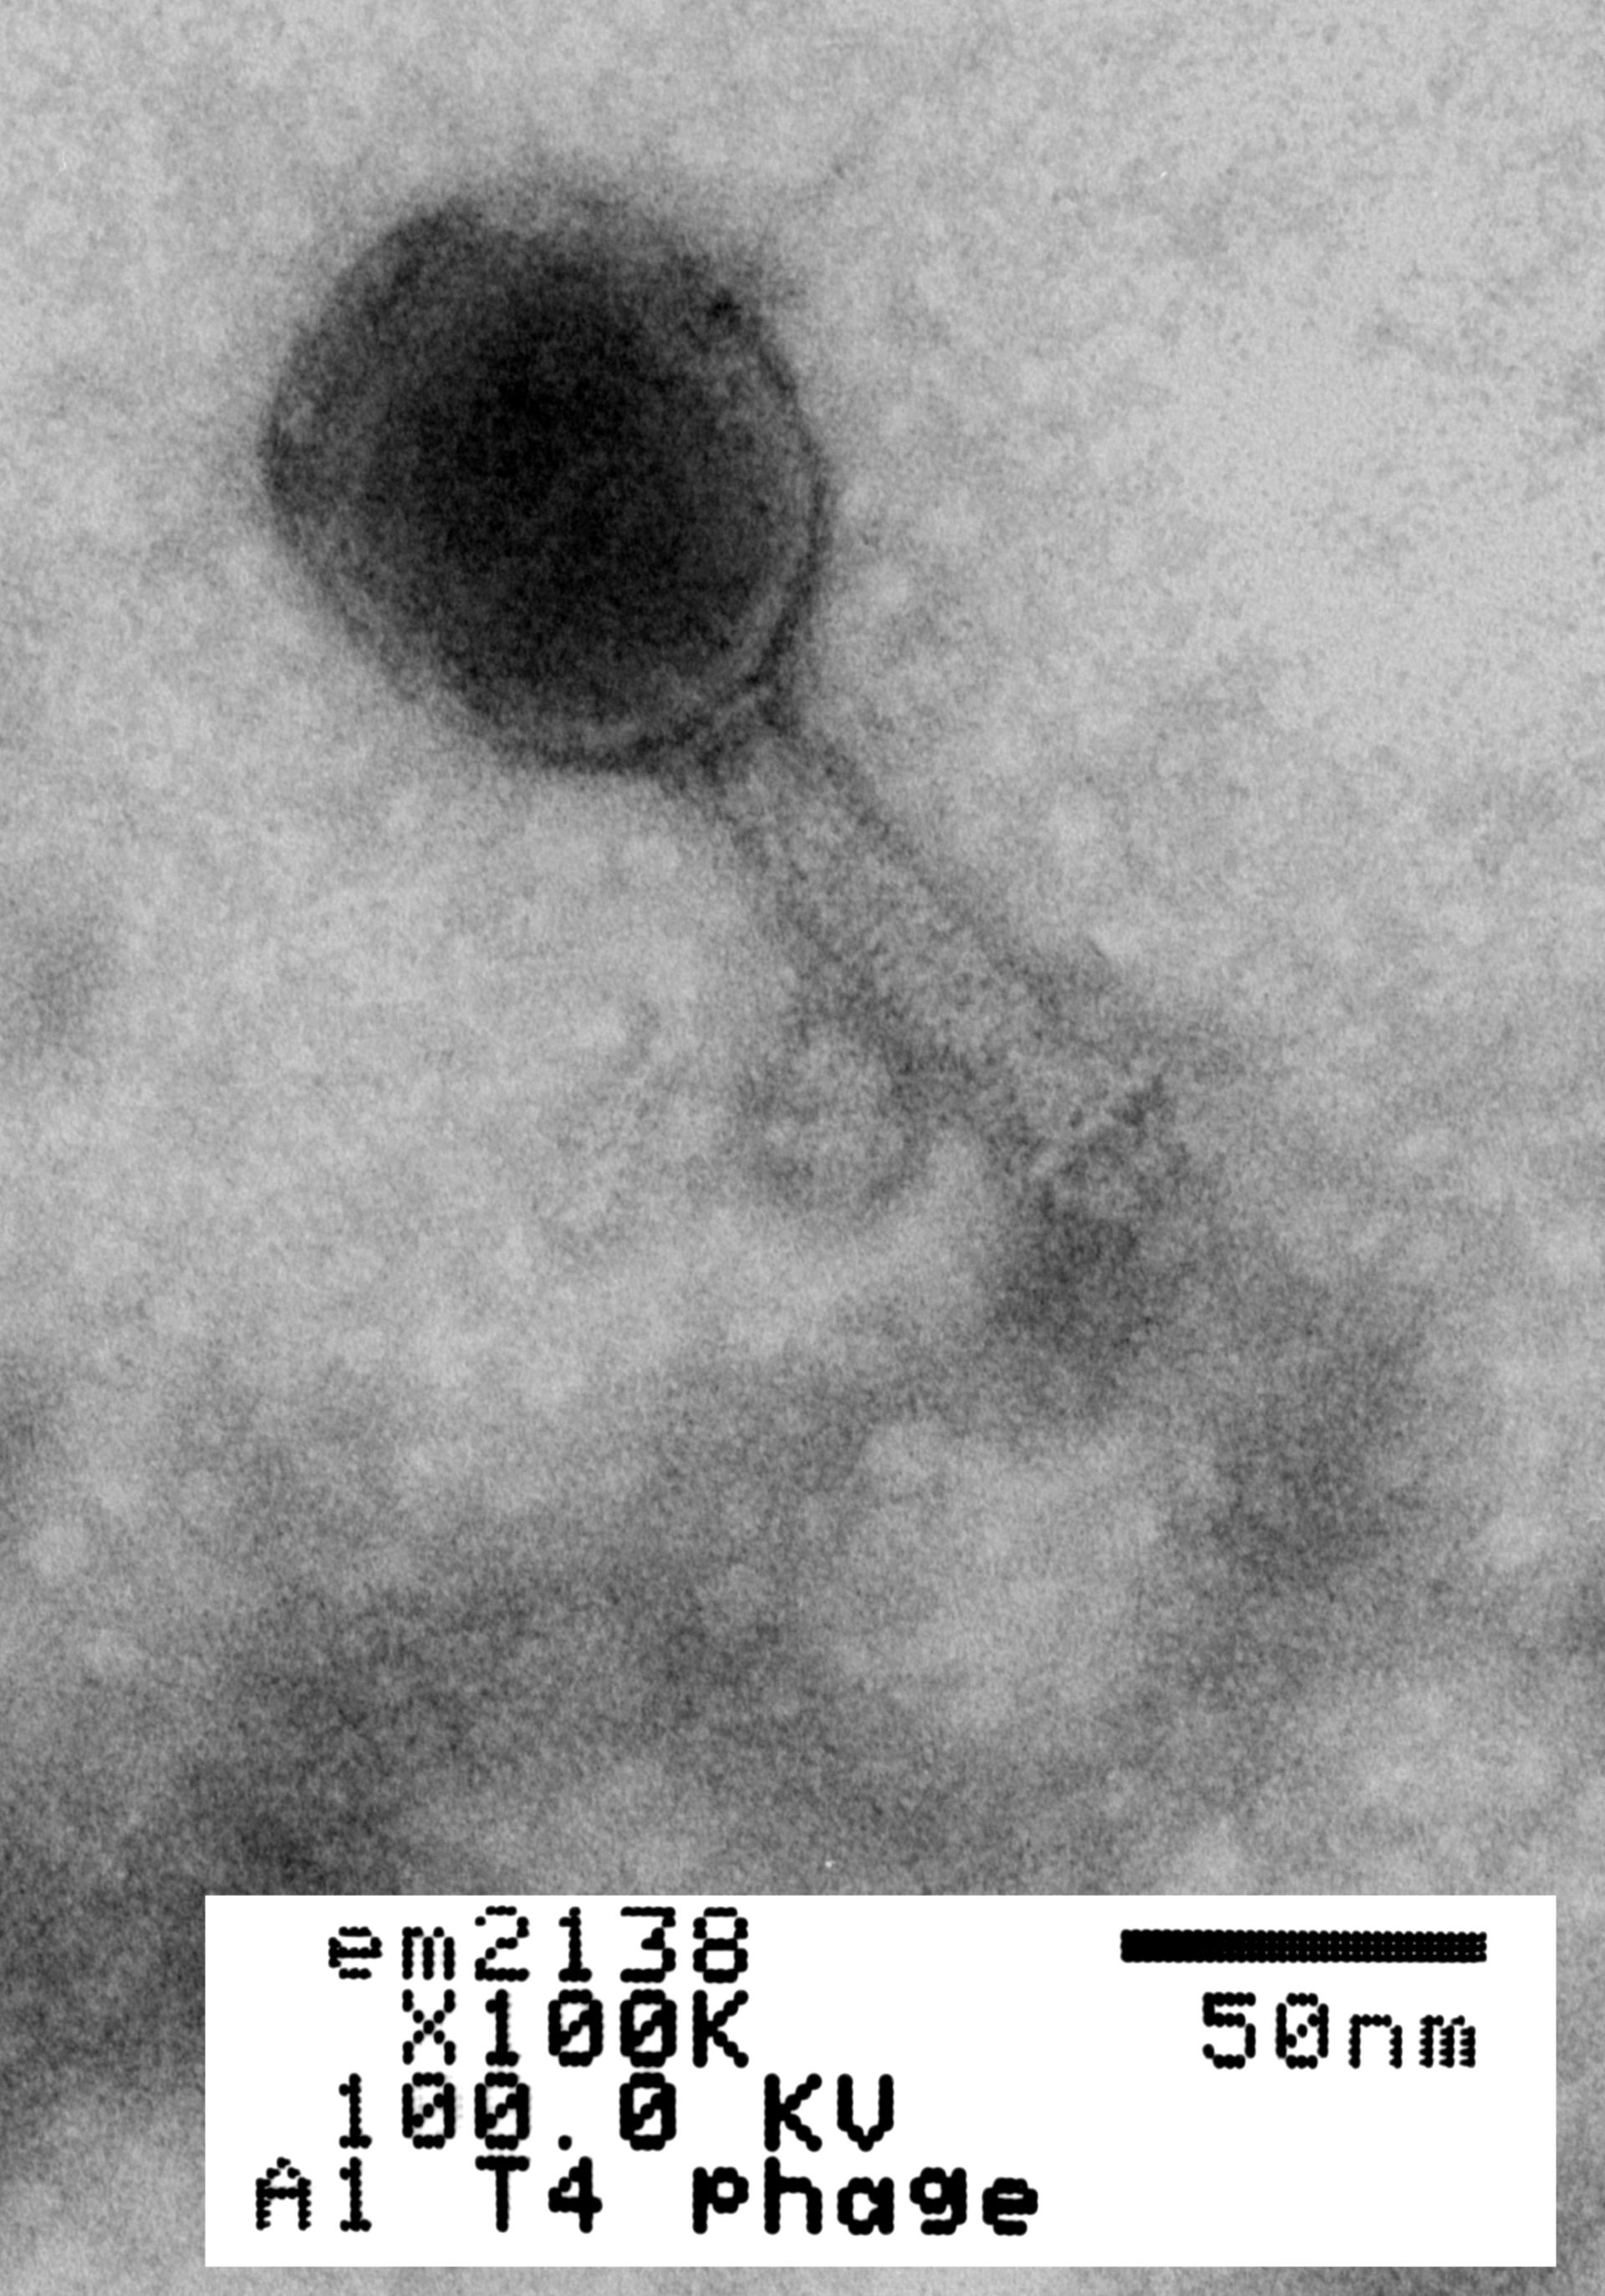 Enterobacteria phage T4 (Phage tail fibers) - CIL:41125